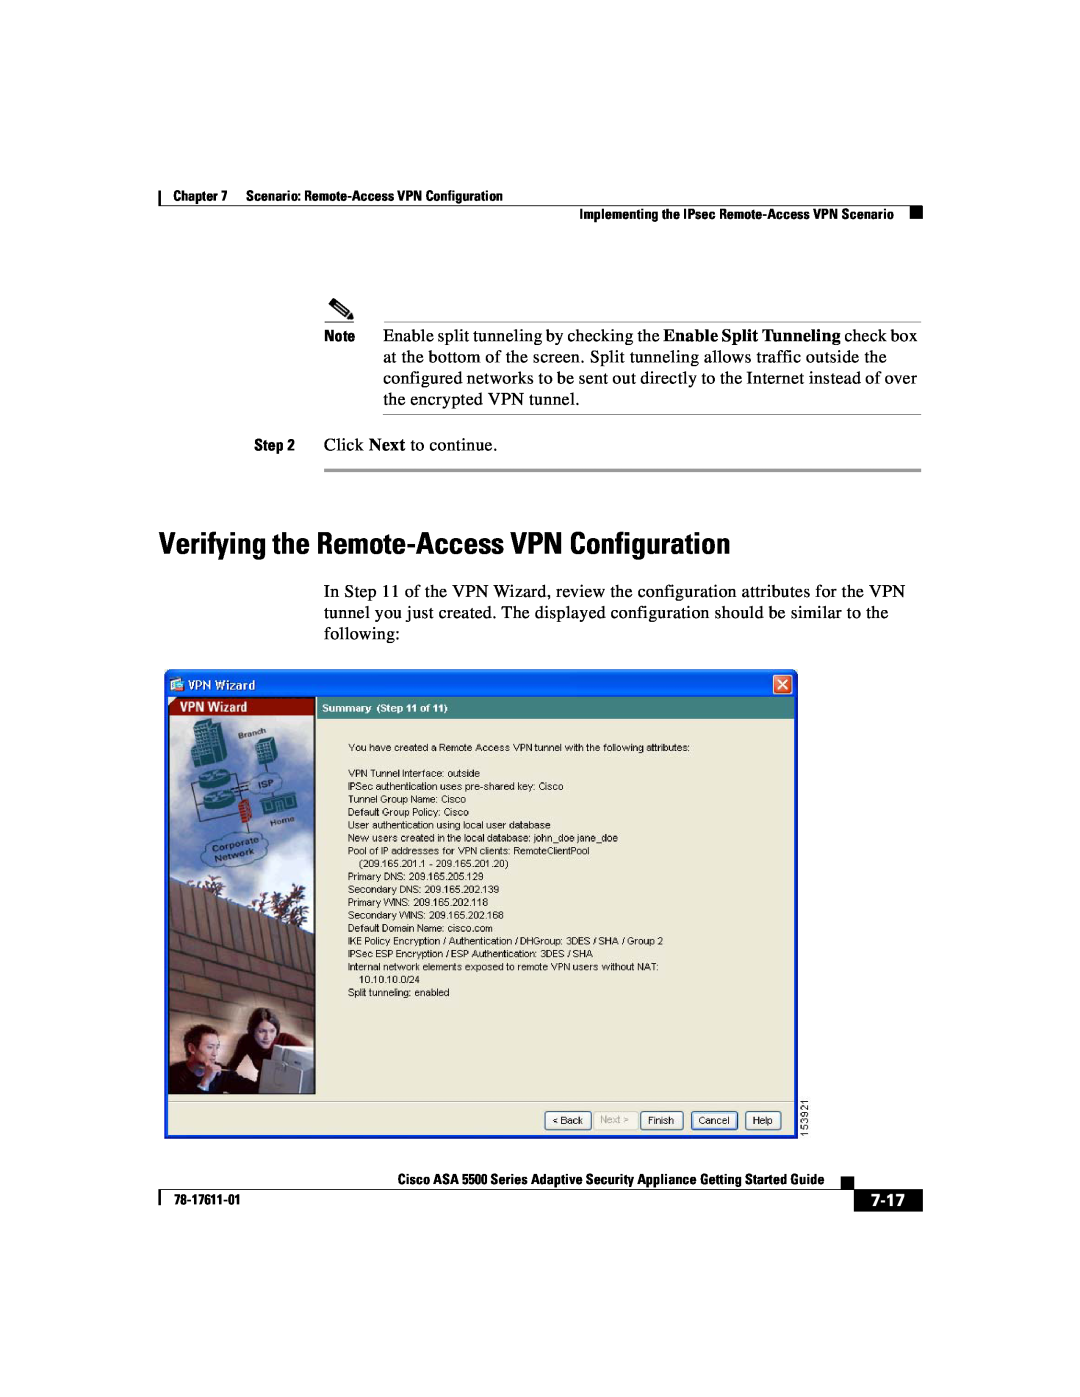 Cisco Systems ASA 5500 manual Verifying the Remote-AccessVPN Configuration, 7-17 